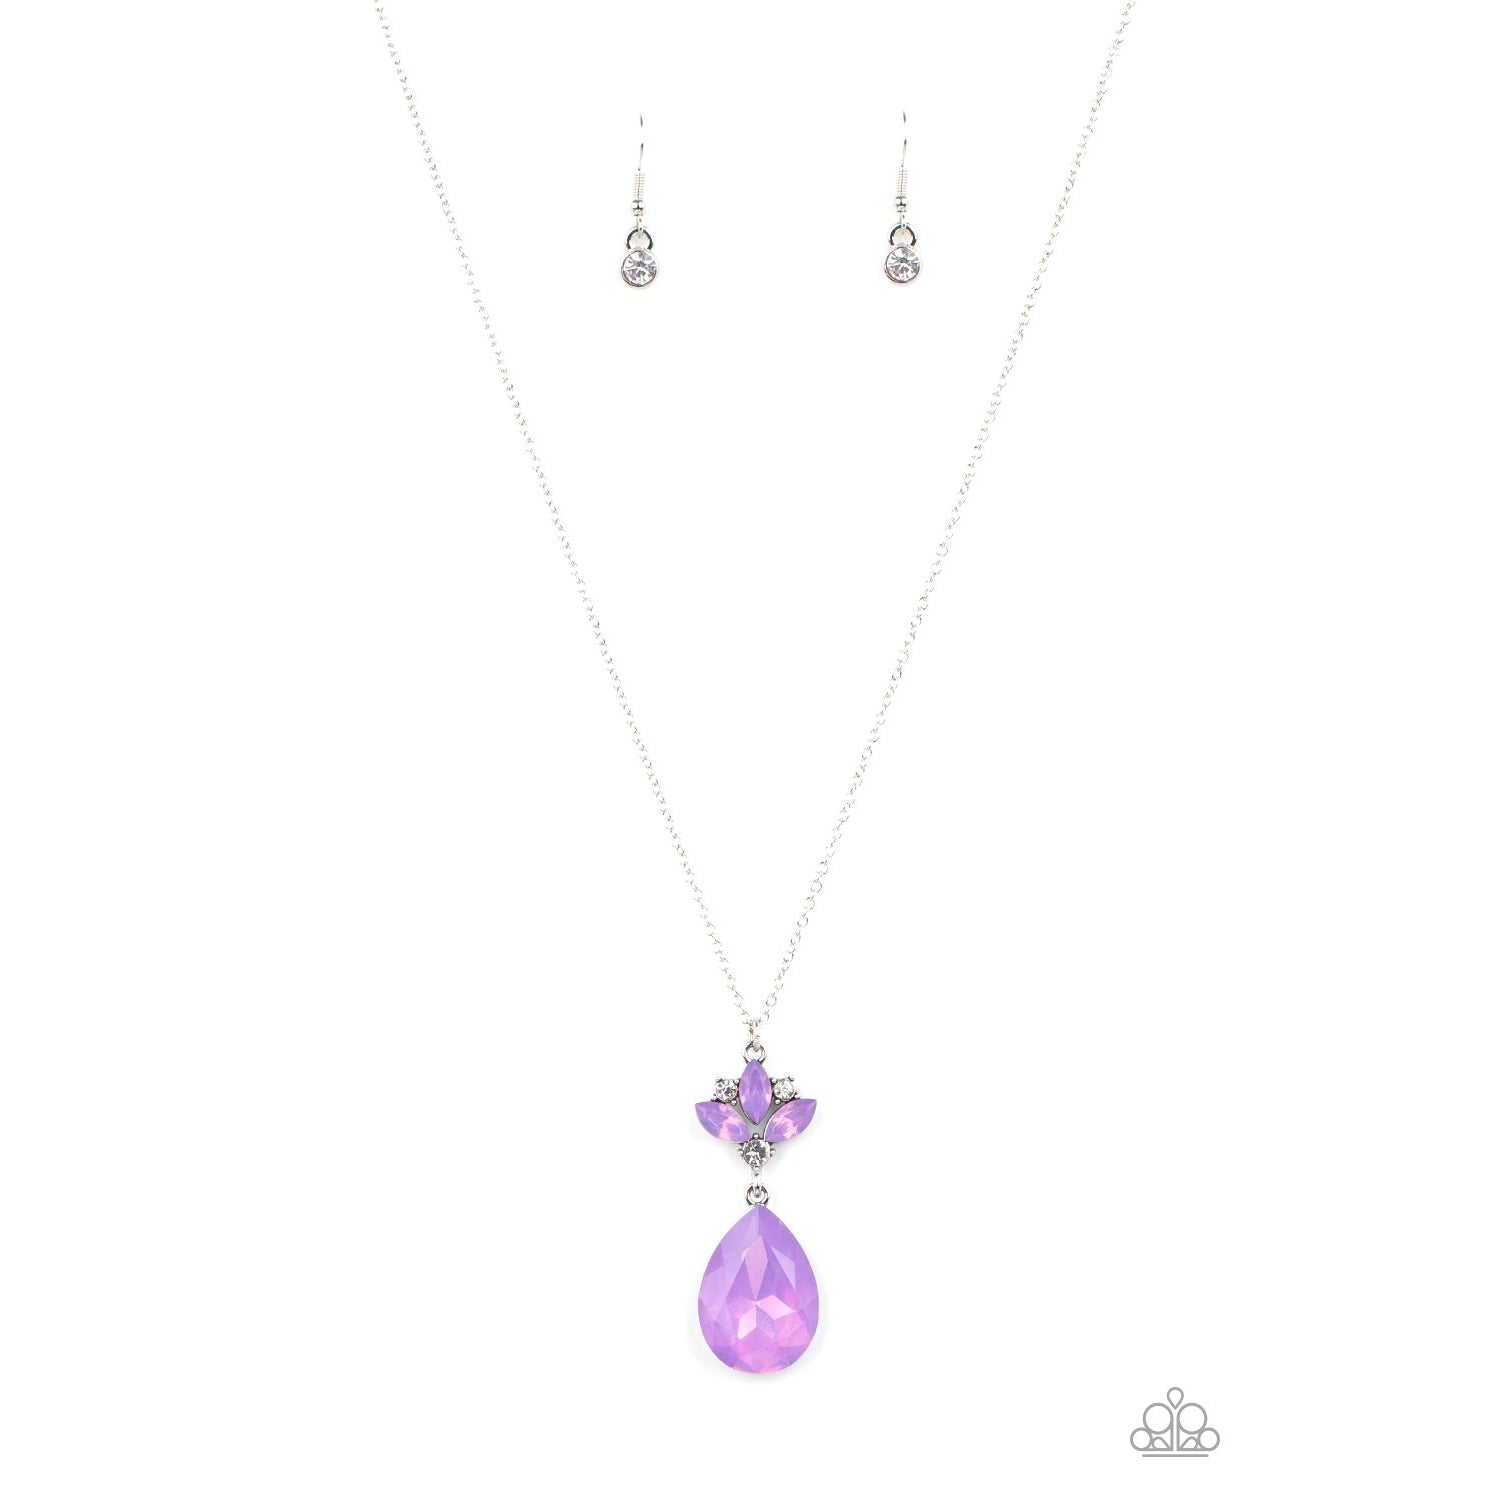 Celestial Shimmer - Purple Necklace - Paparazzi Accessories - GlaMarous Titi Jewels